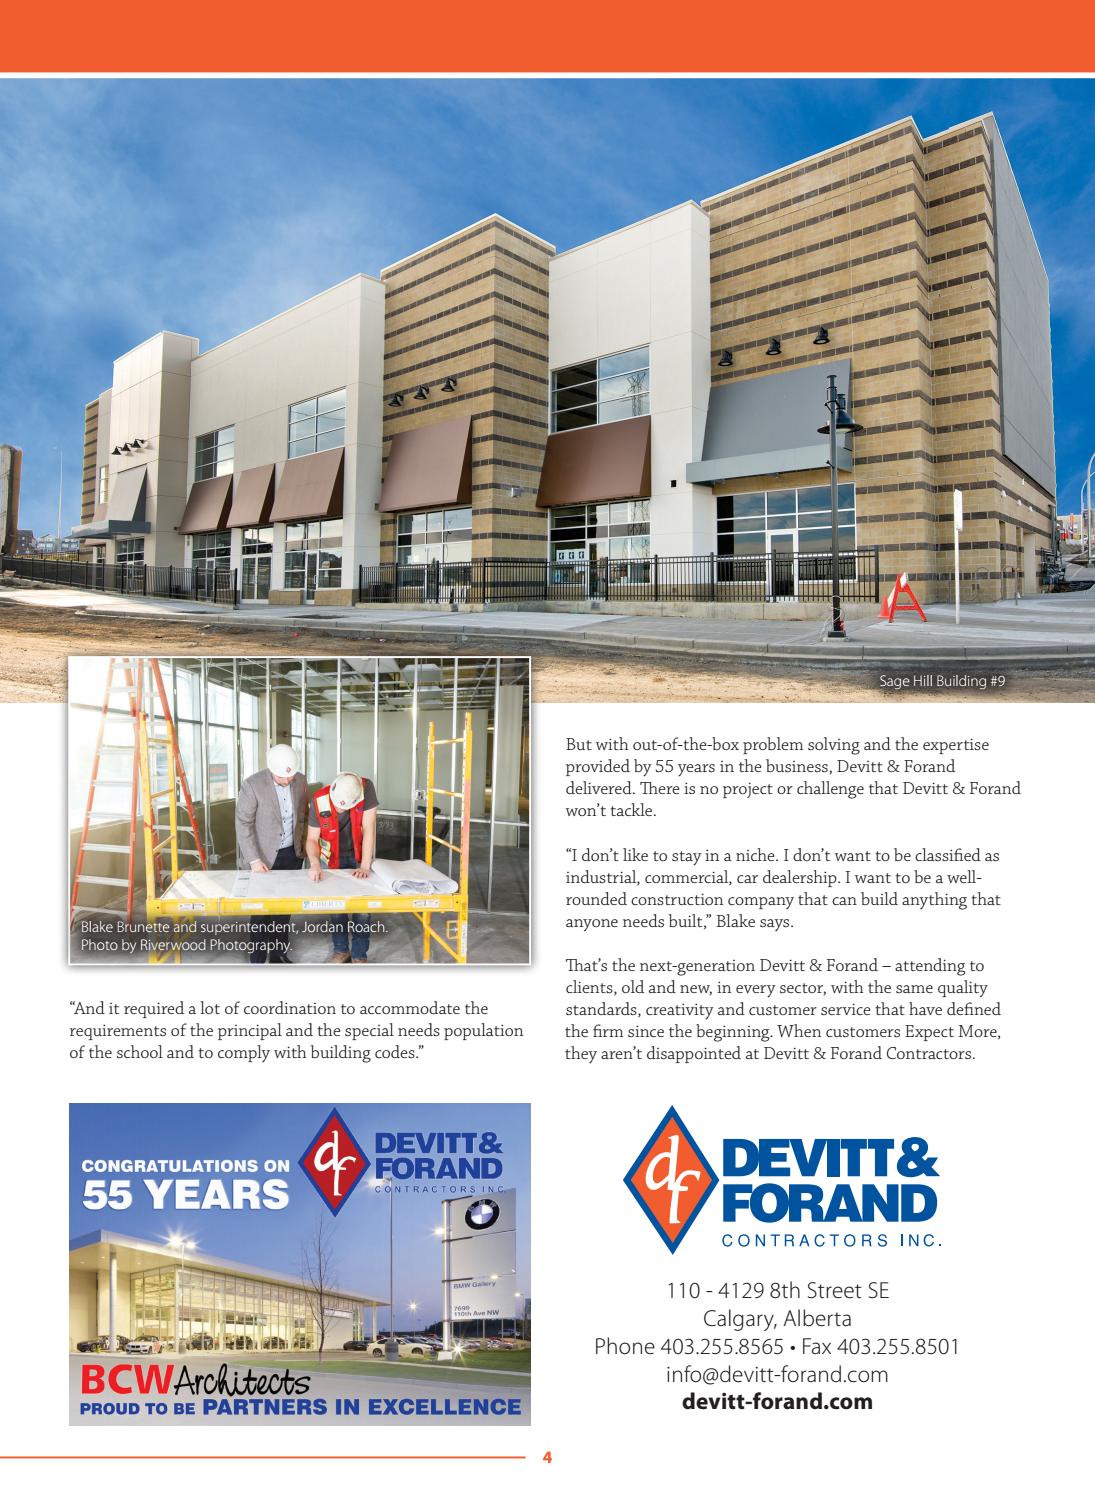 Business in Calgary Magazine - Business Profile for Devitt & Forand